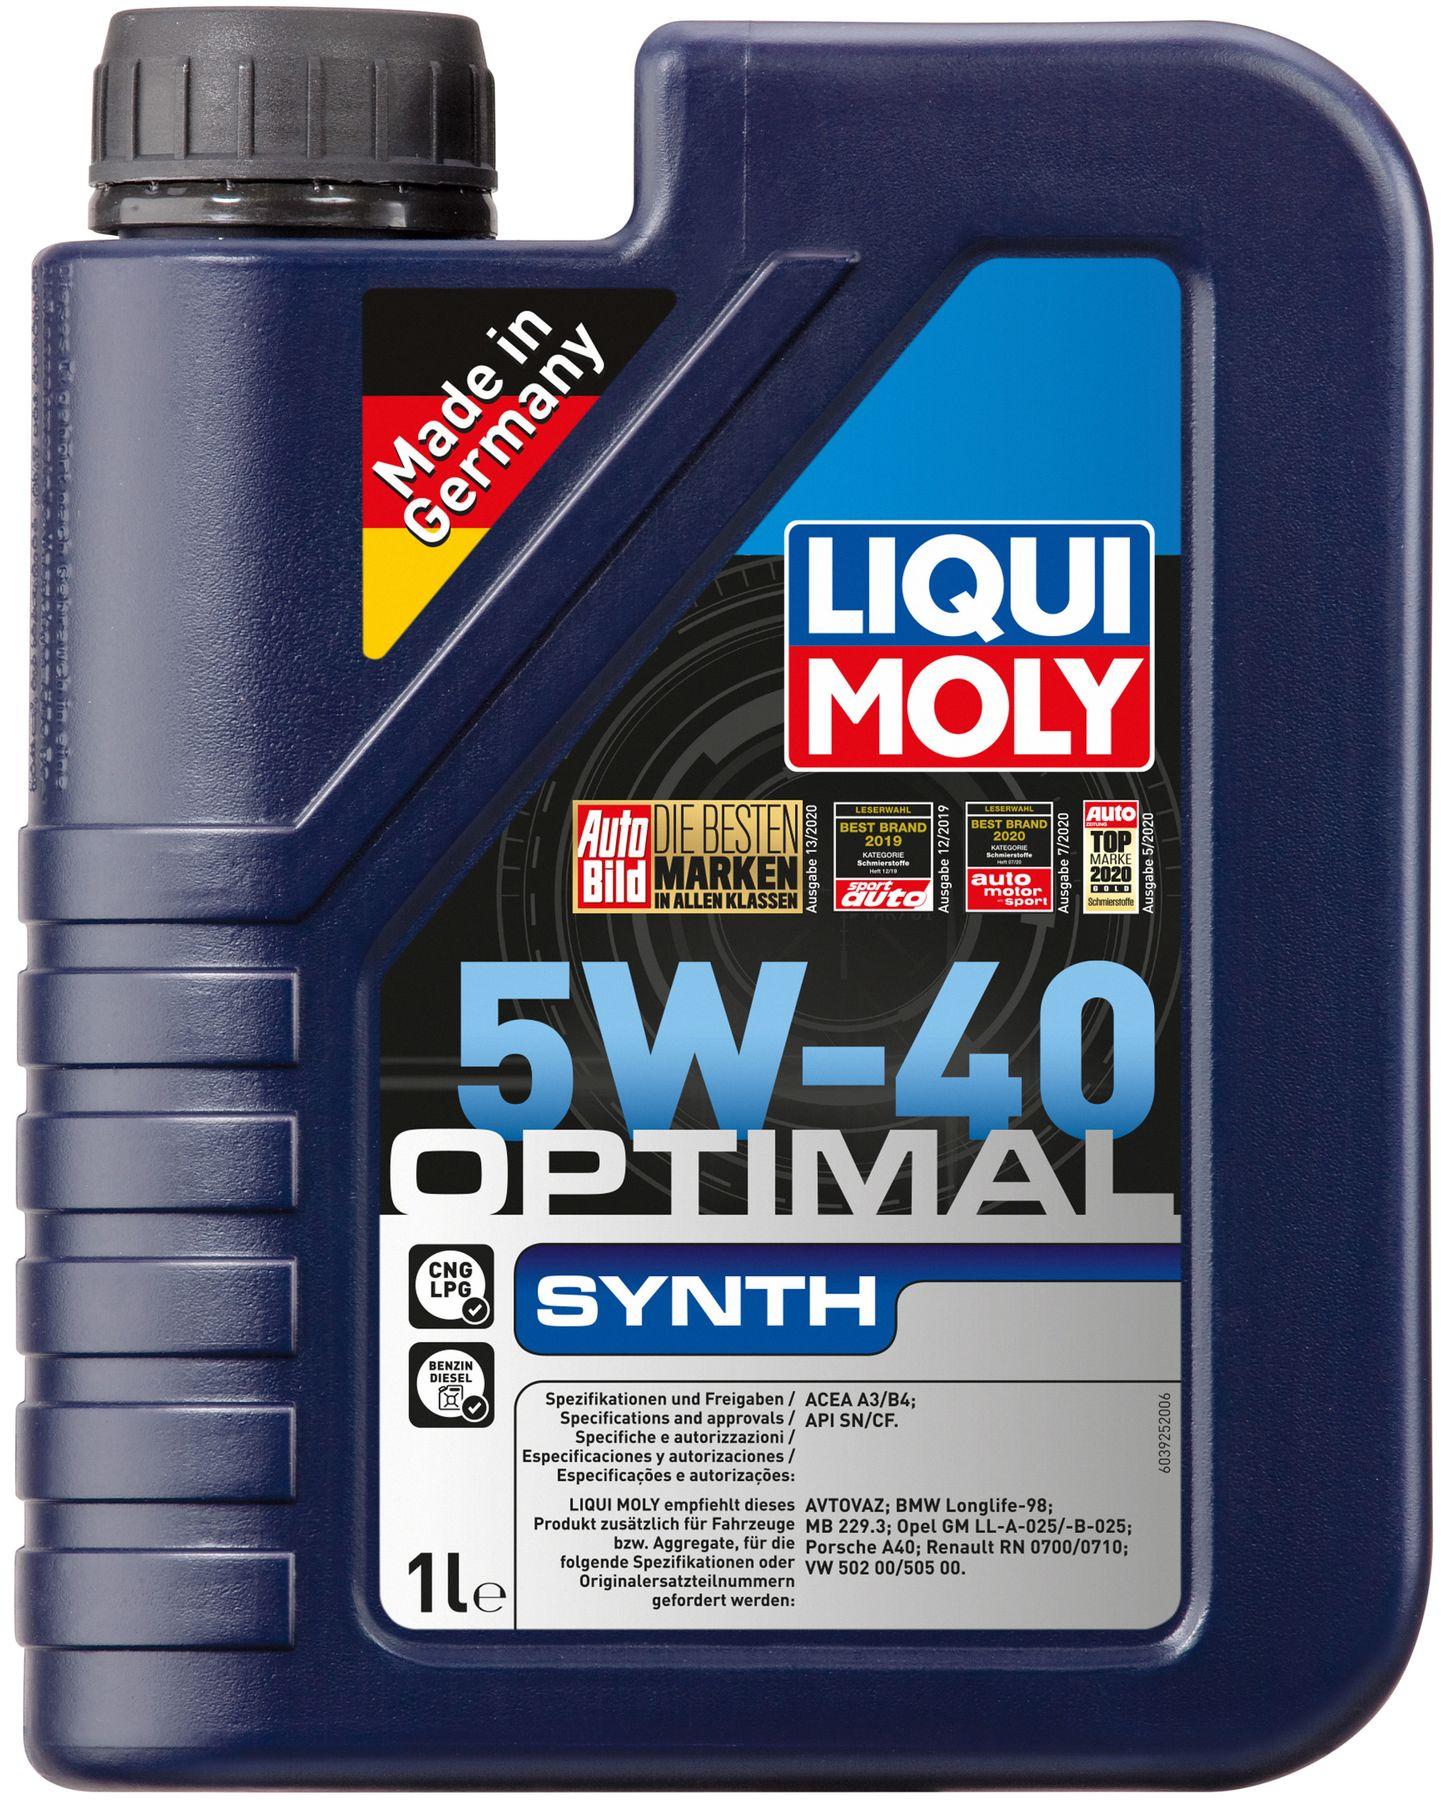 Моторное масло Liqui Moly Optimal Synth 5W-40, 1 литр (3925)